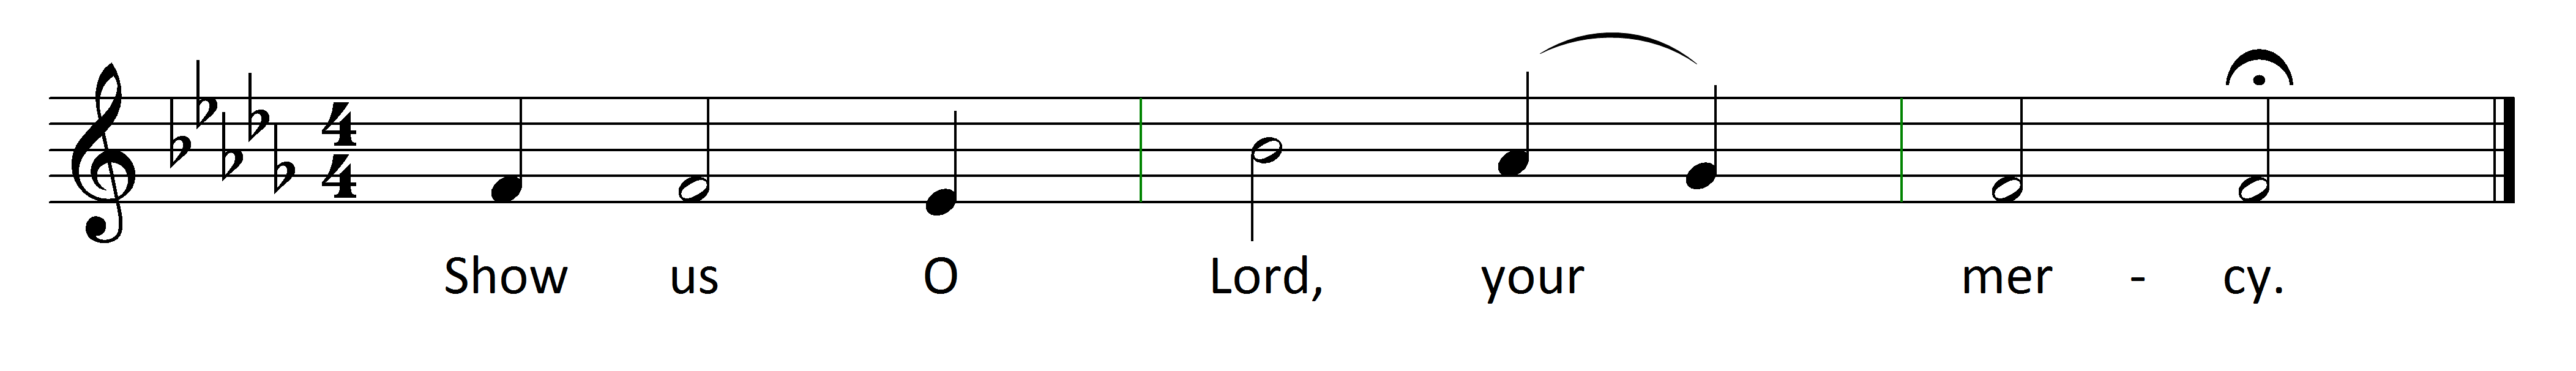 psalm chant